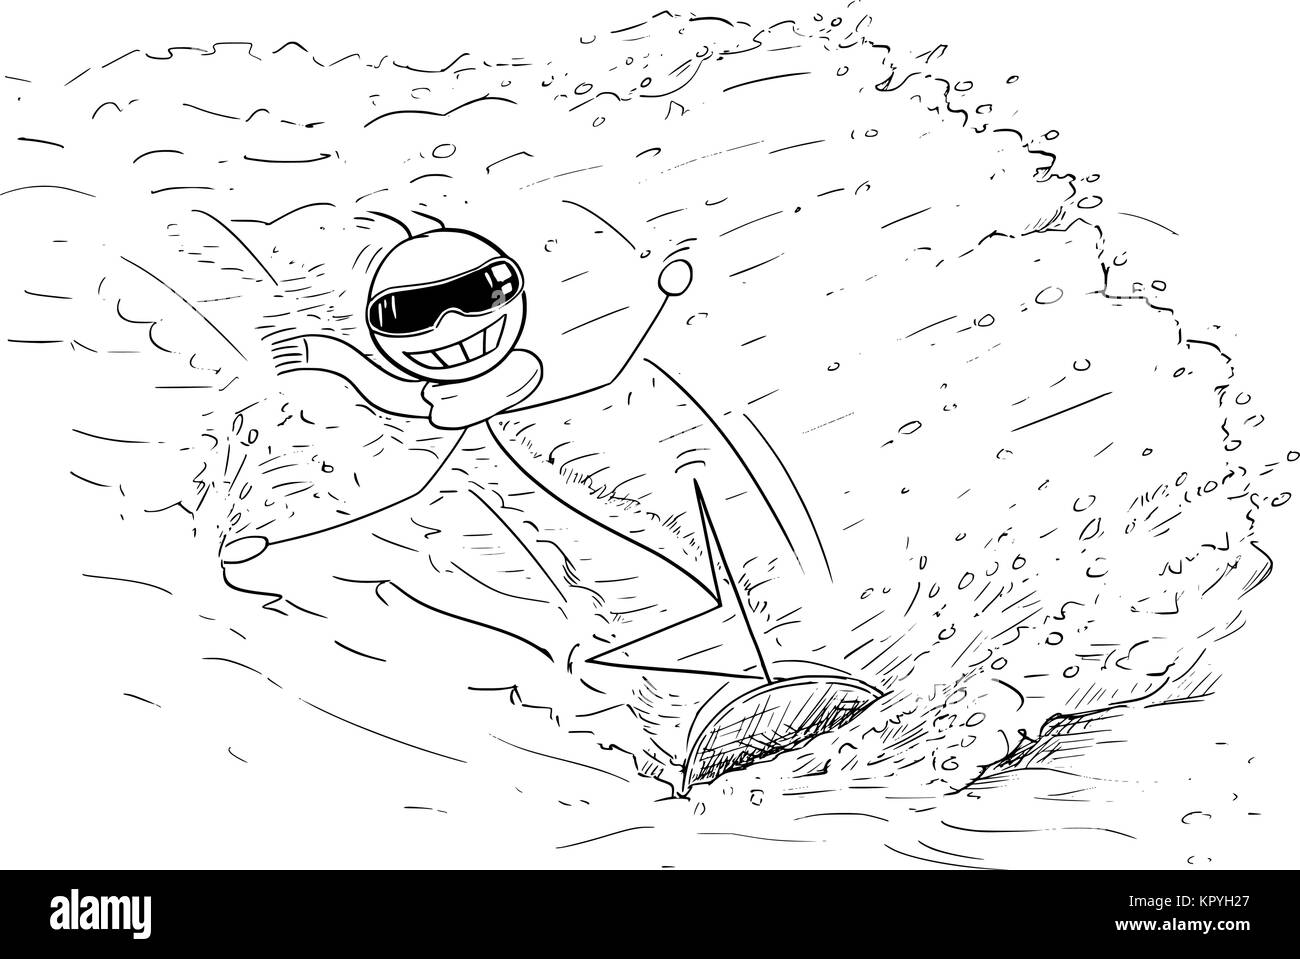 Cartoon stick man drawing illustration of man snowboarding on snowboard. Stock Vector